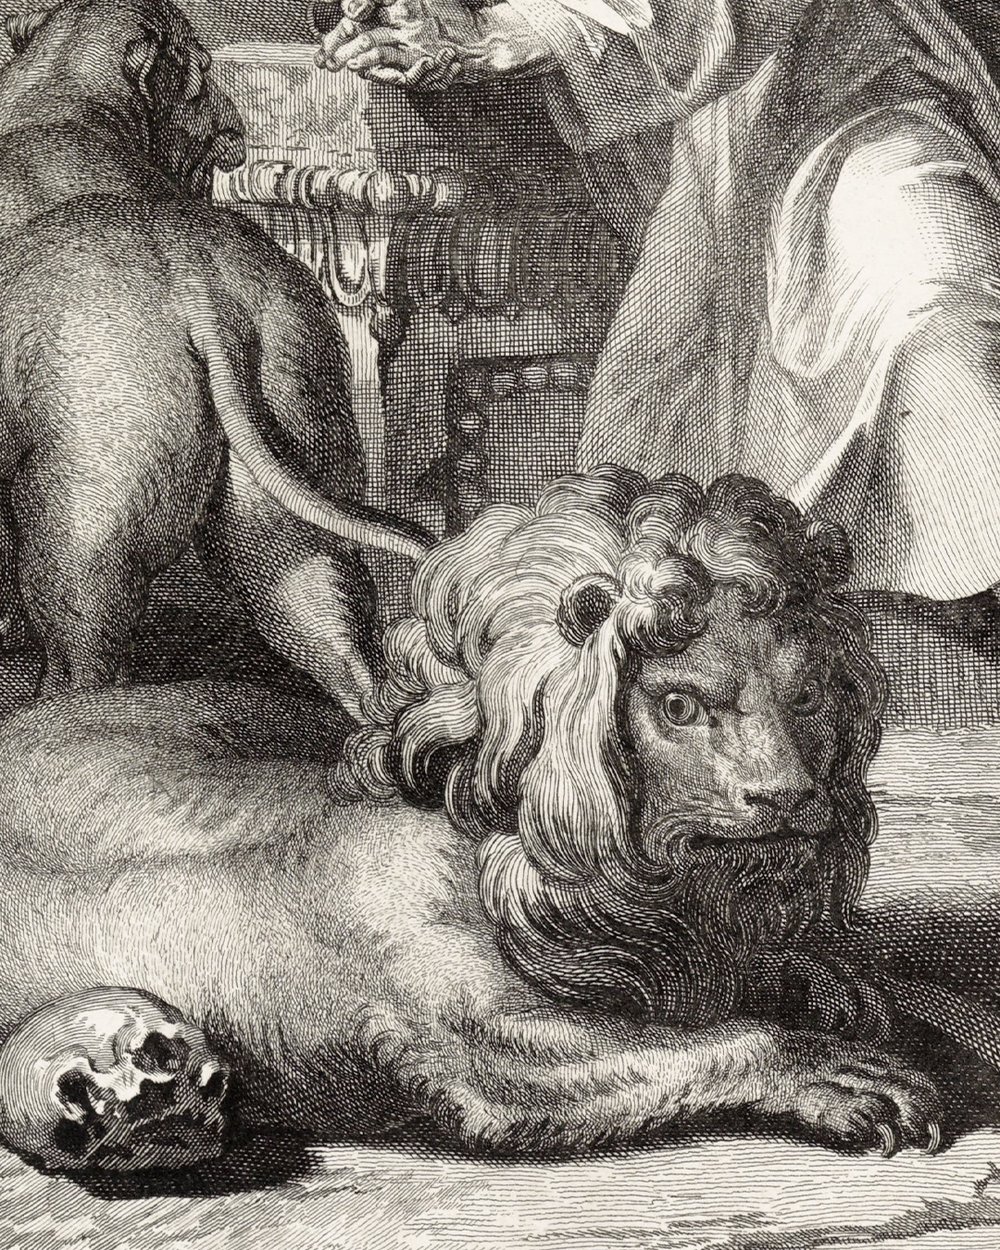 "Daniel in the lions' den" (1720 - 1728)